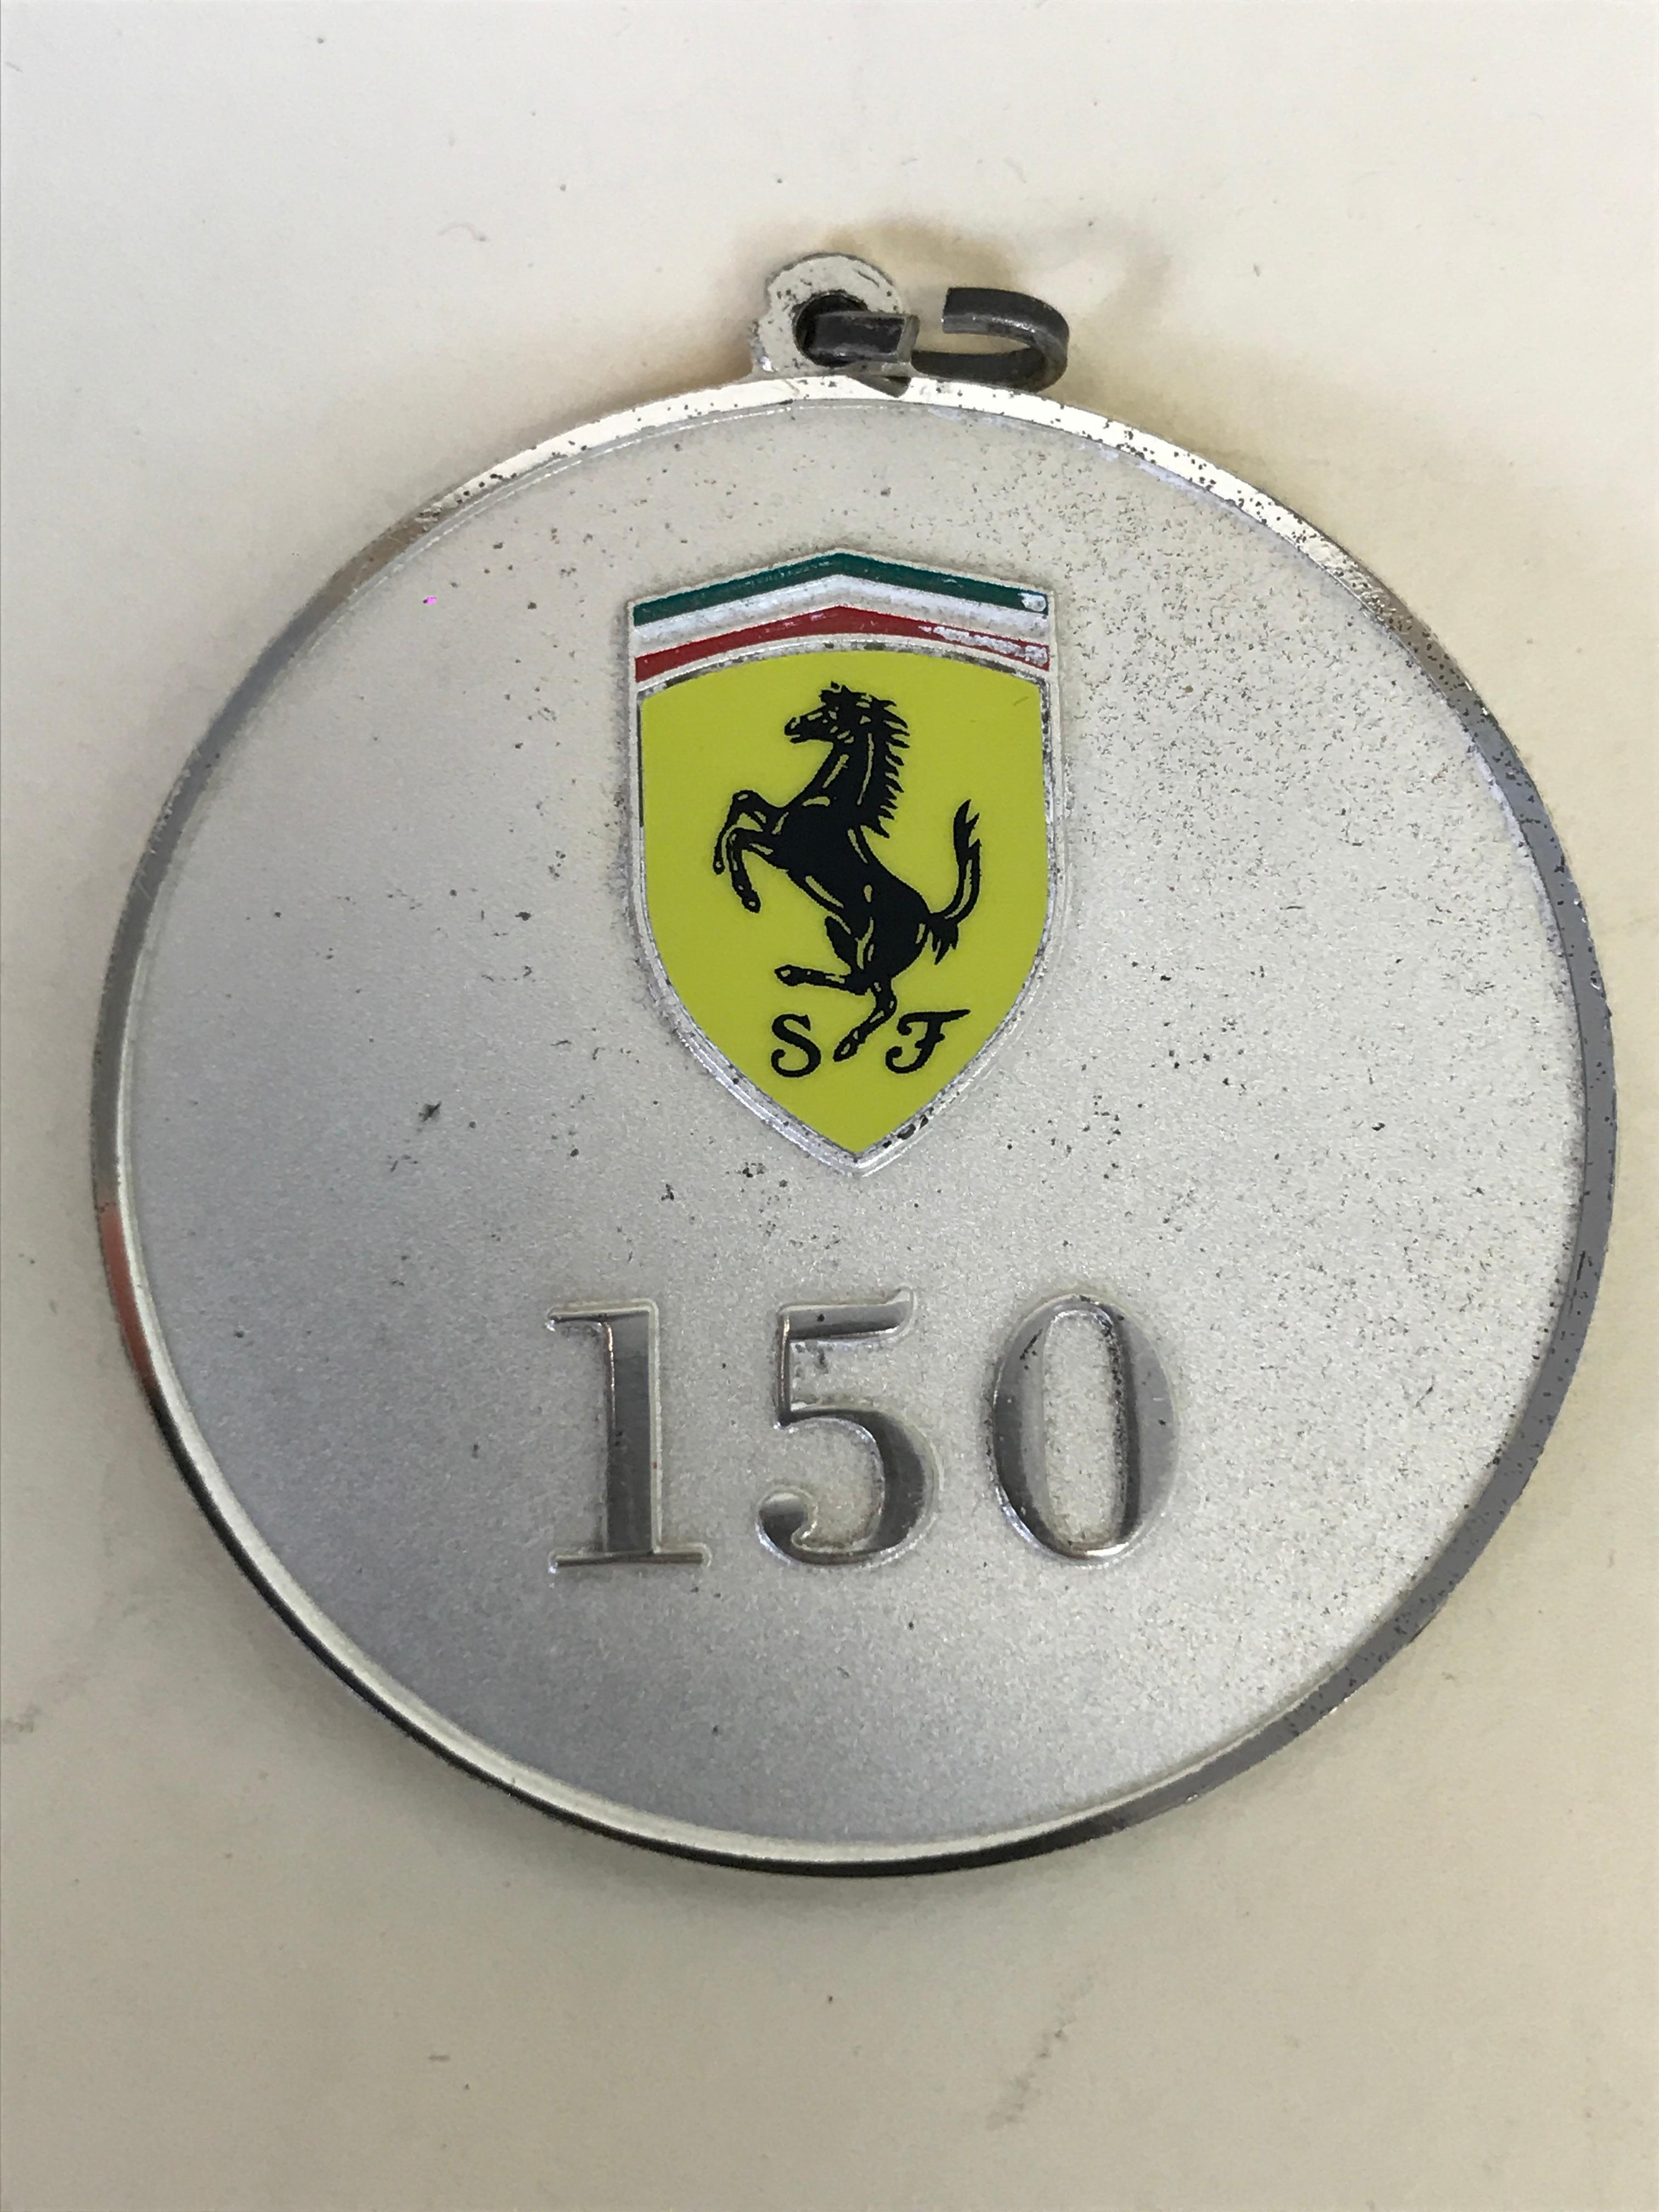 Italian 2002 Vintage Ferrari Commemorative Medal Celebrating the 150th Victory of GP For Sale